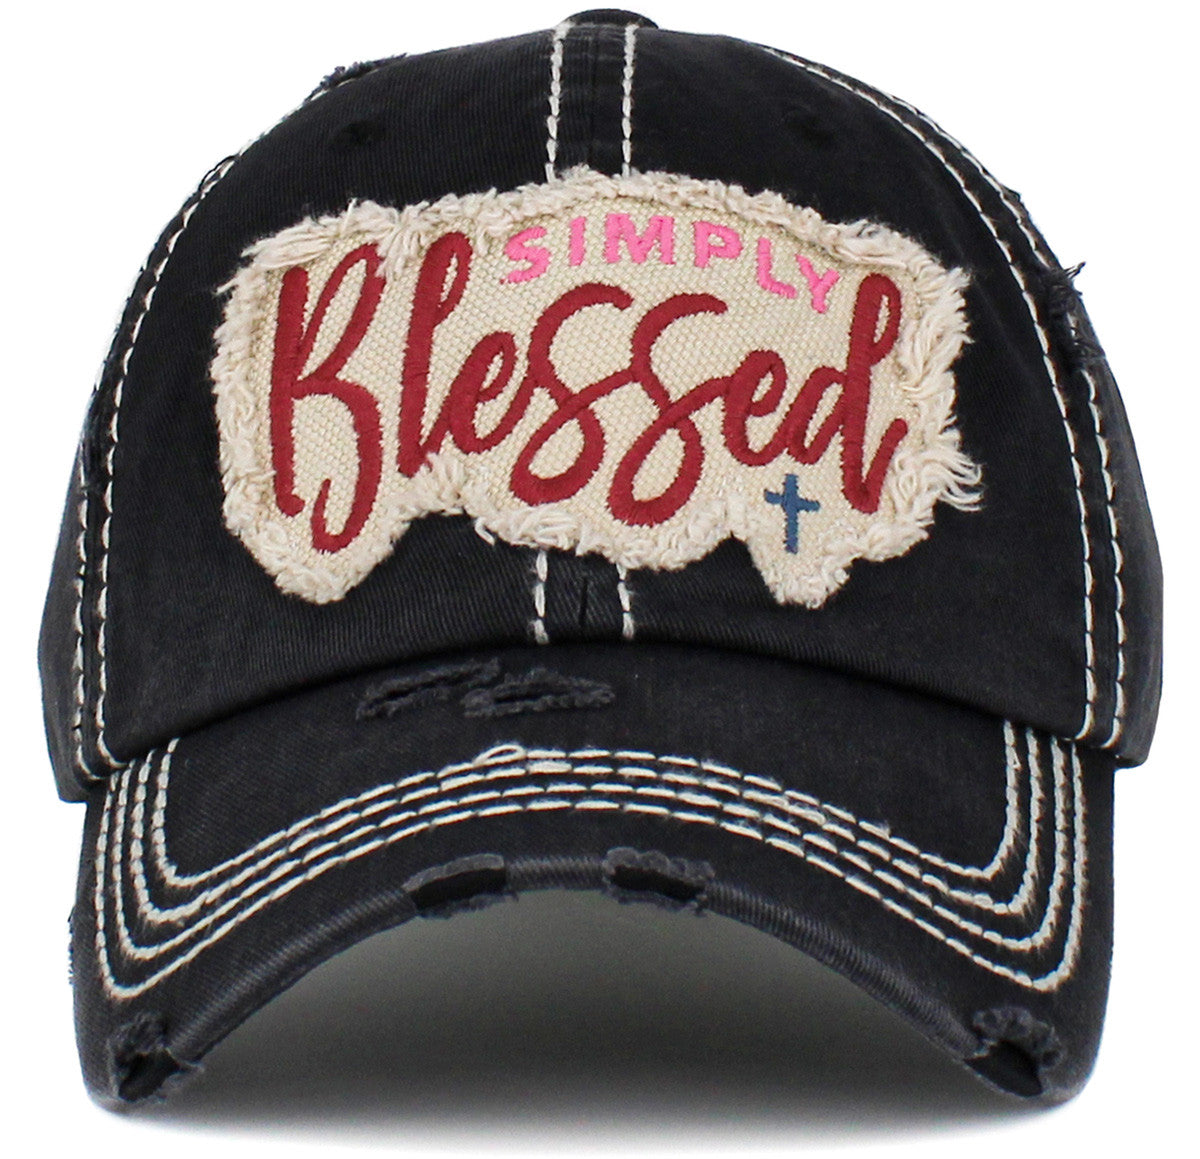 Simply Blessed Vintage Hat - iNeedaHat.COM